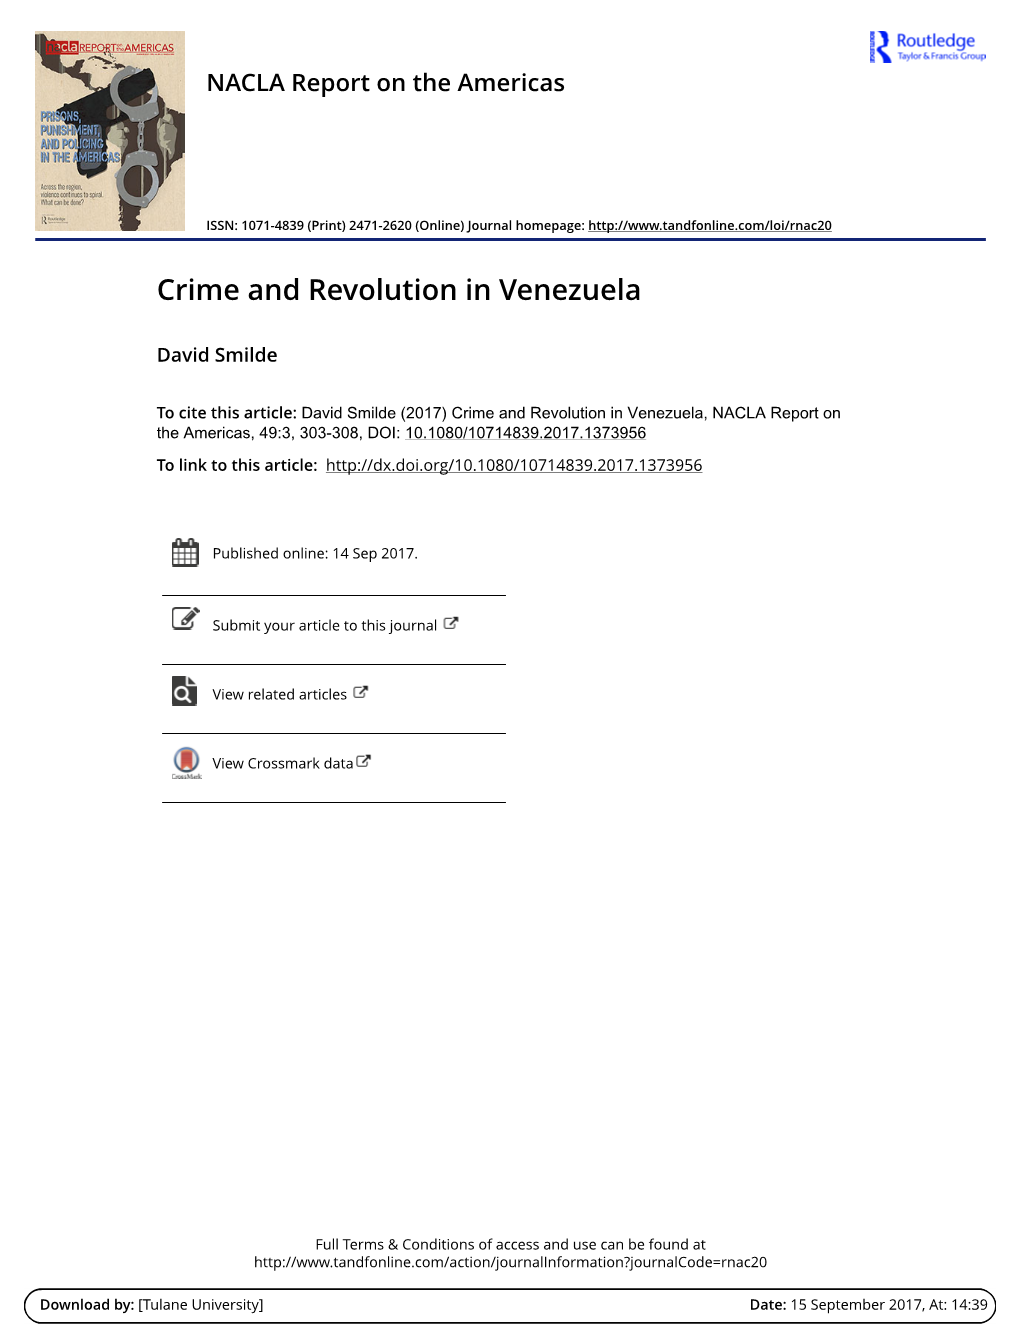 Crime and Revolution in Venezuela